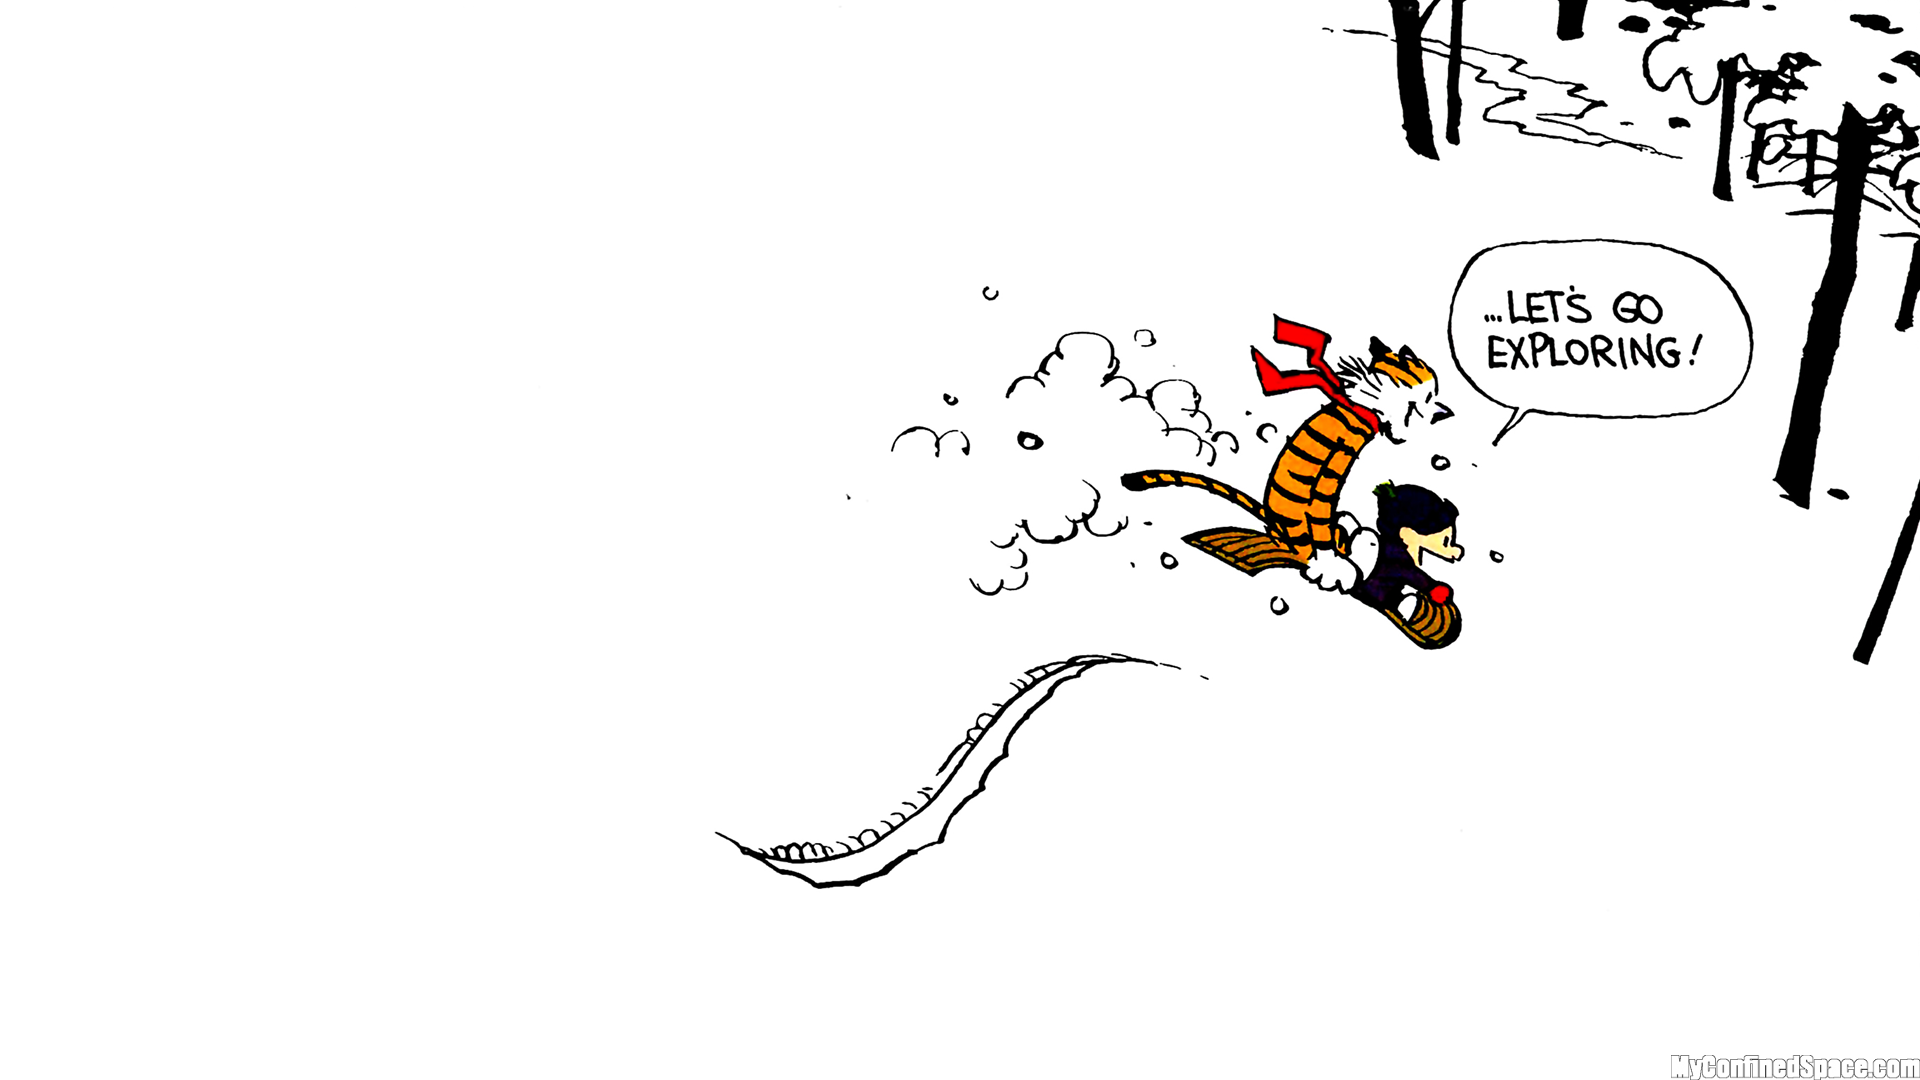 Calvin and hobbes comics j wallpaper | 1920x1080 | 162417 ...